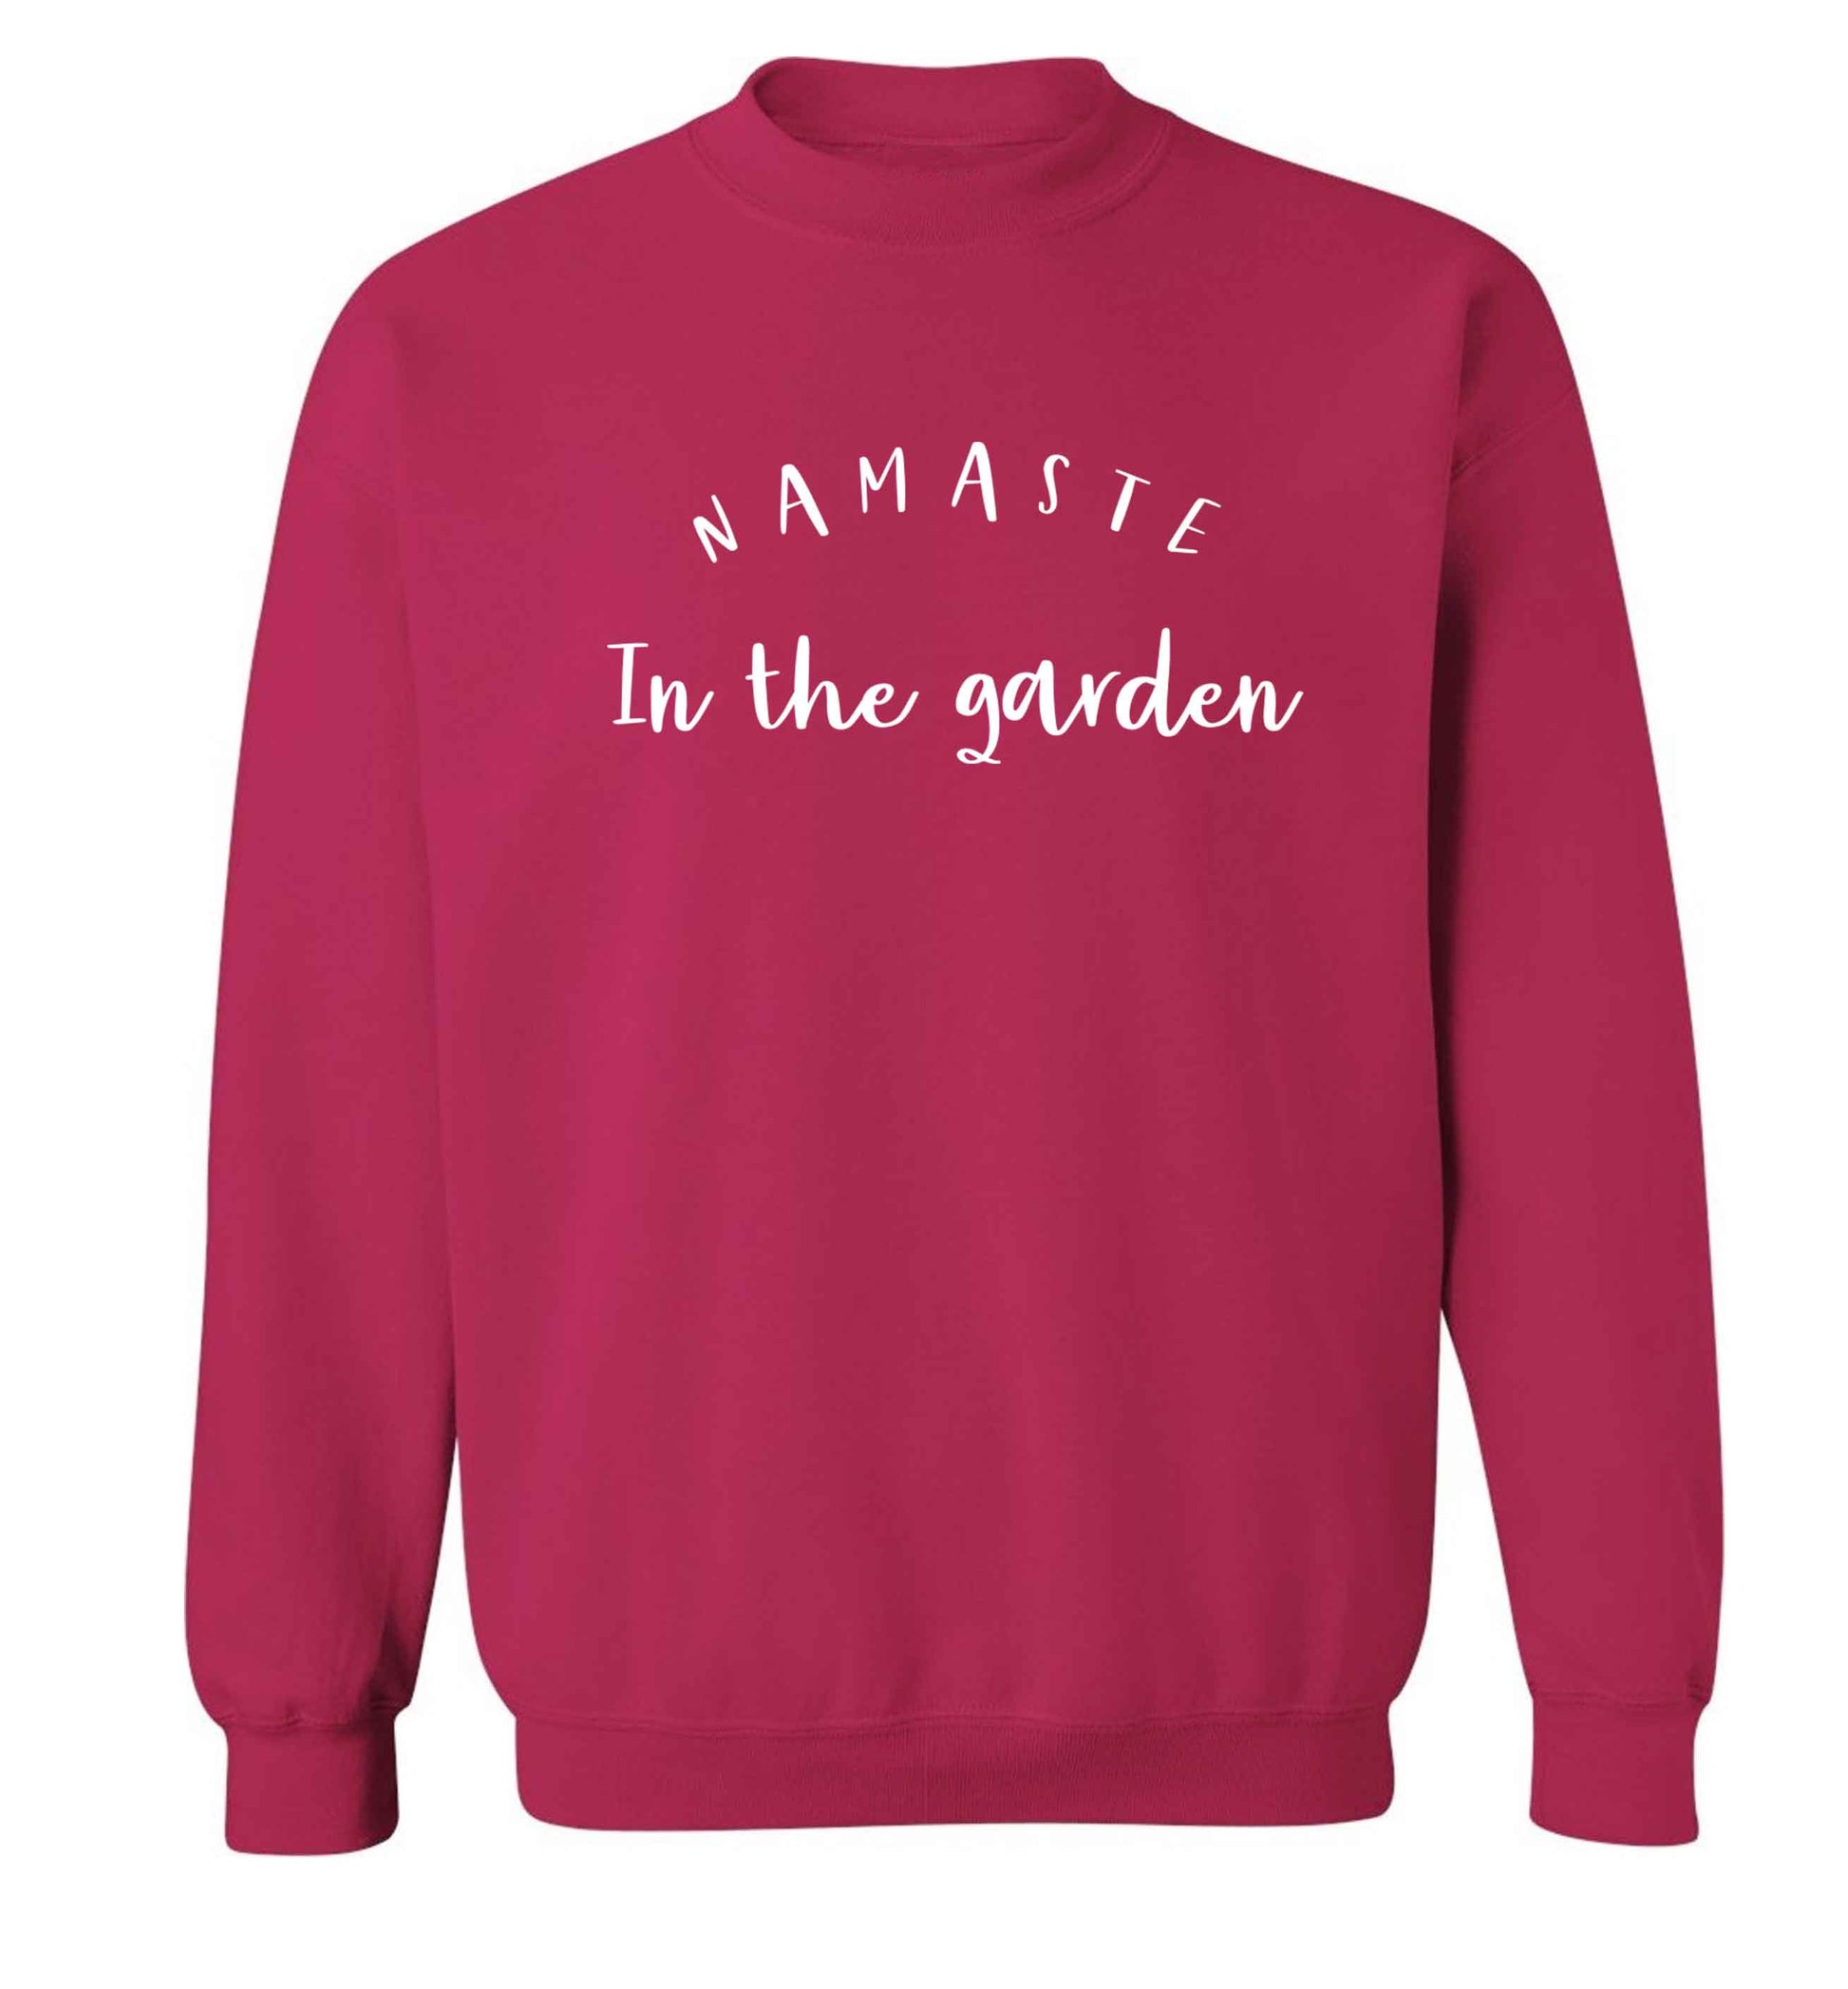 Namaste in the garden Adult's unisex pink Sweater 2XL